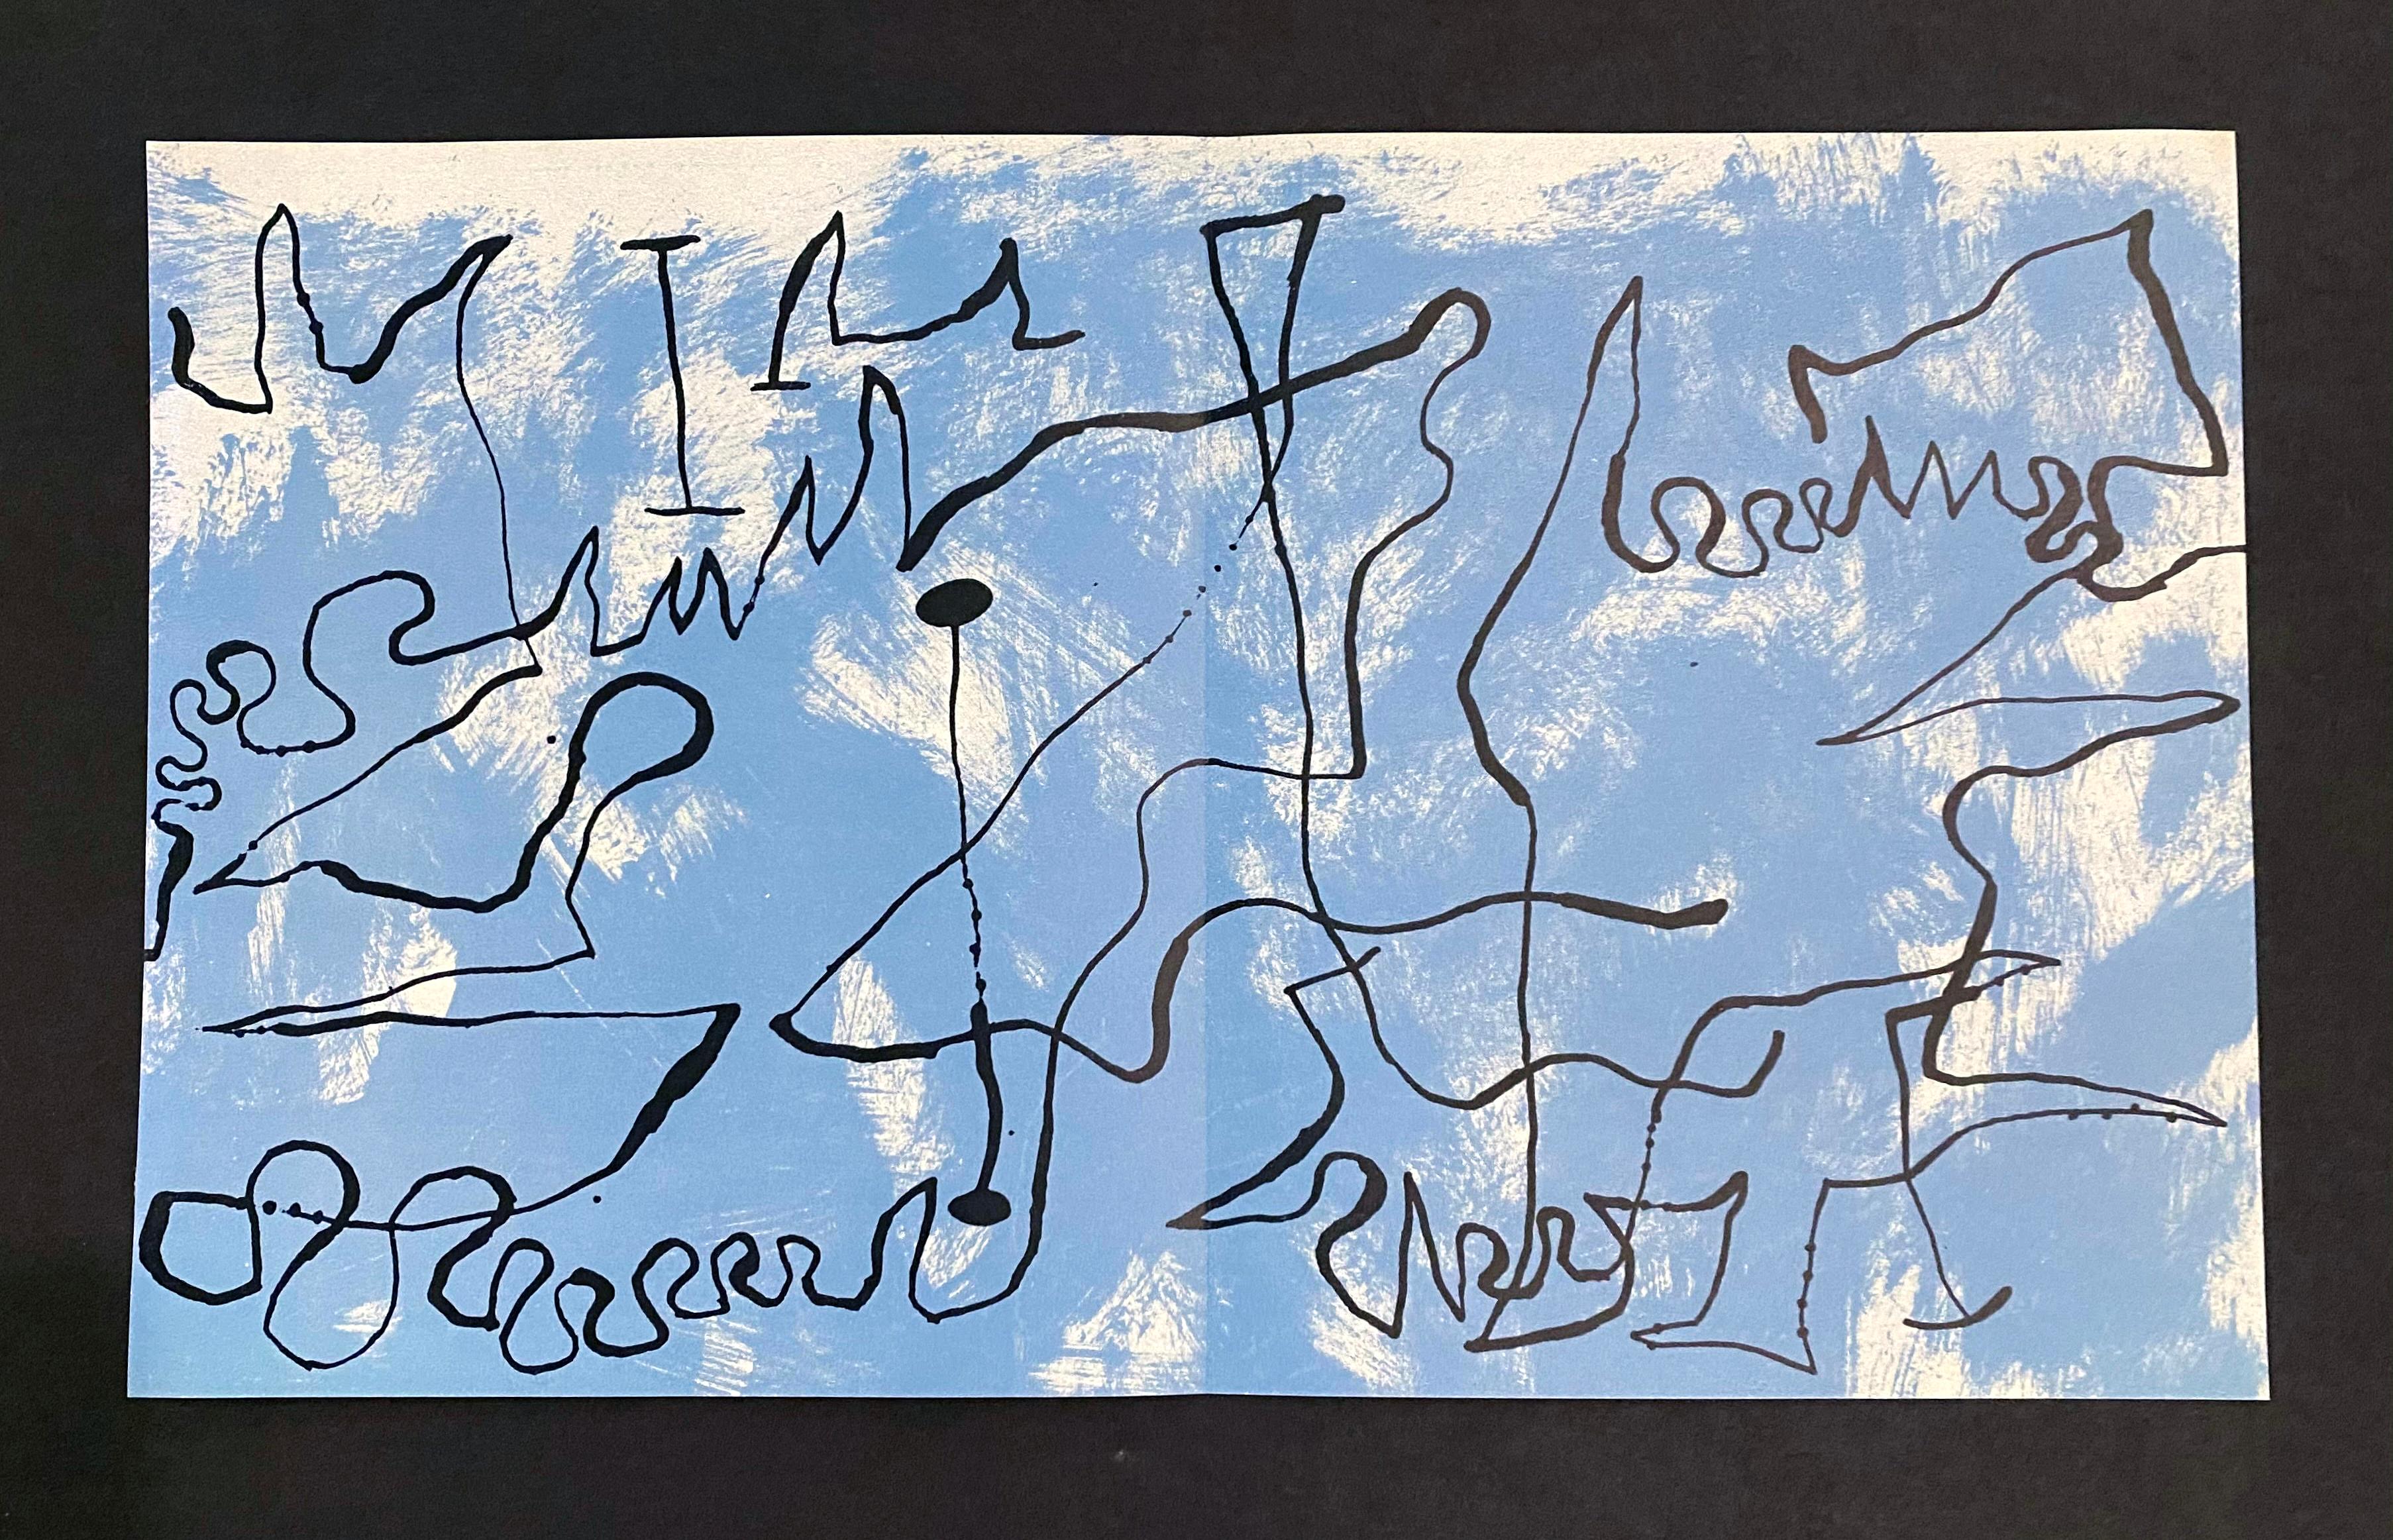 Joan Miro (Plate 3) - Abstract Print by Joan Miró